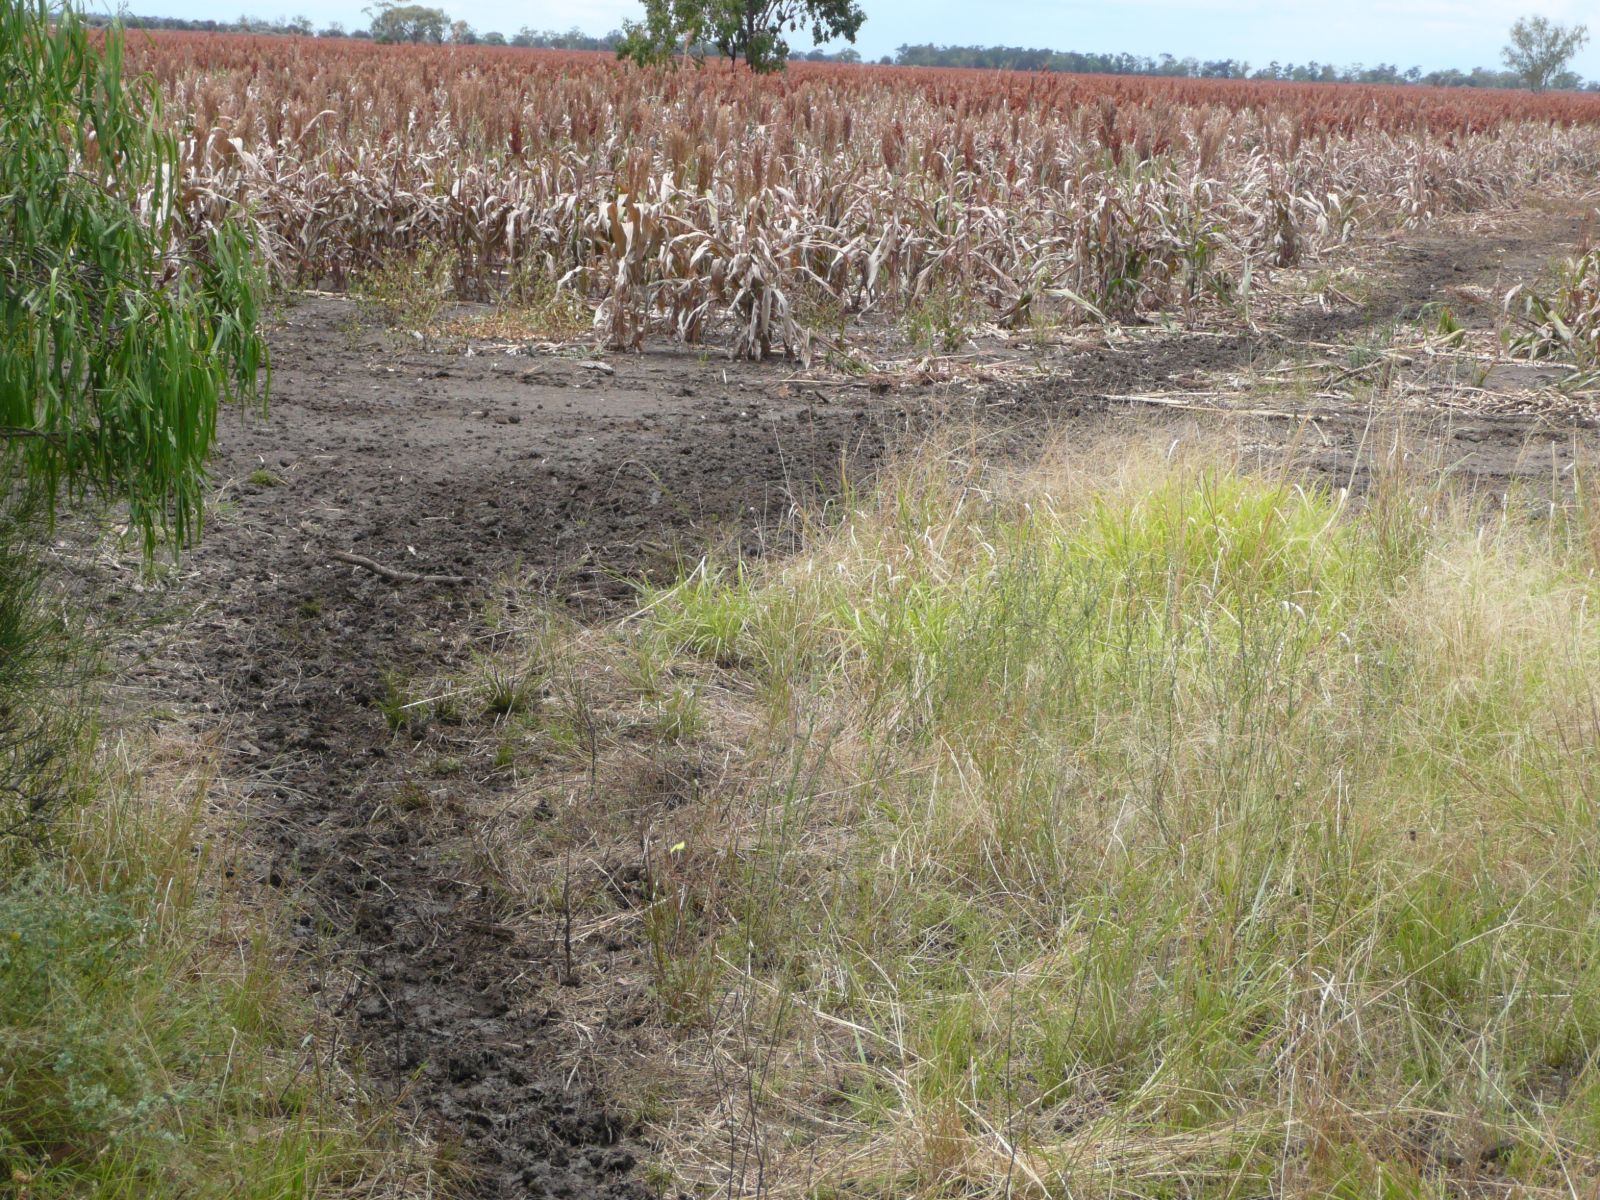 Muddy path through the centre of a crop field.